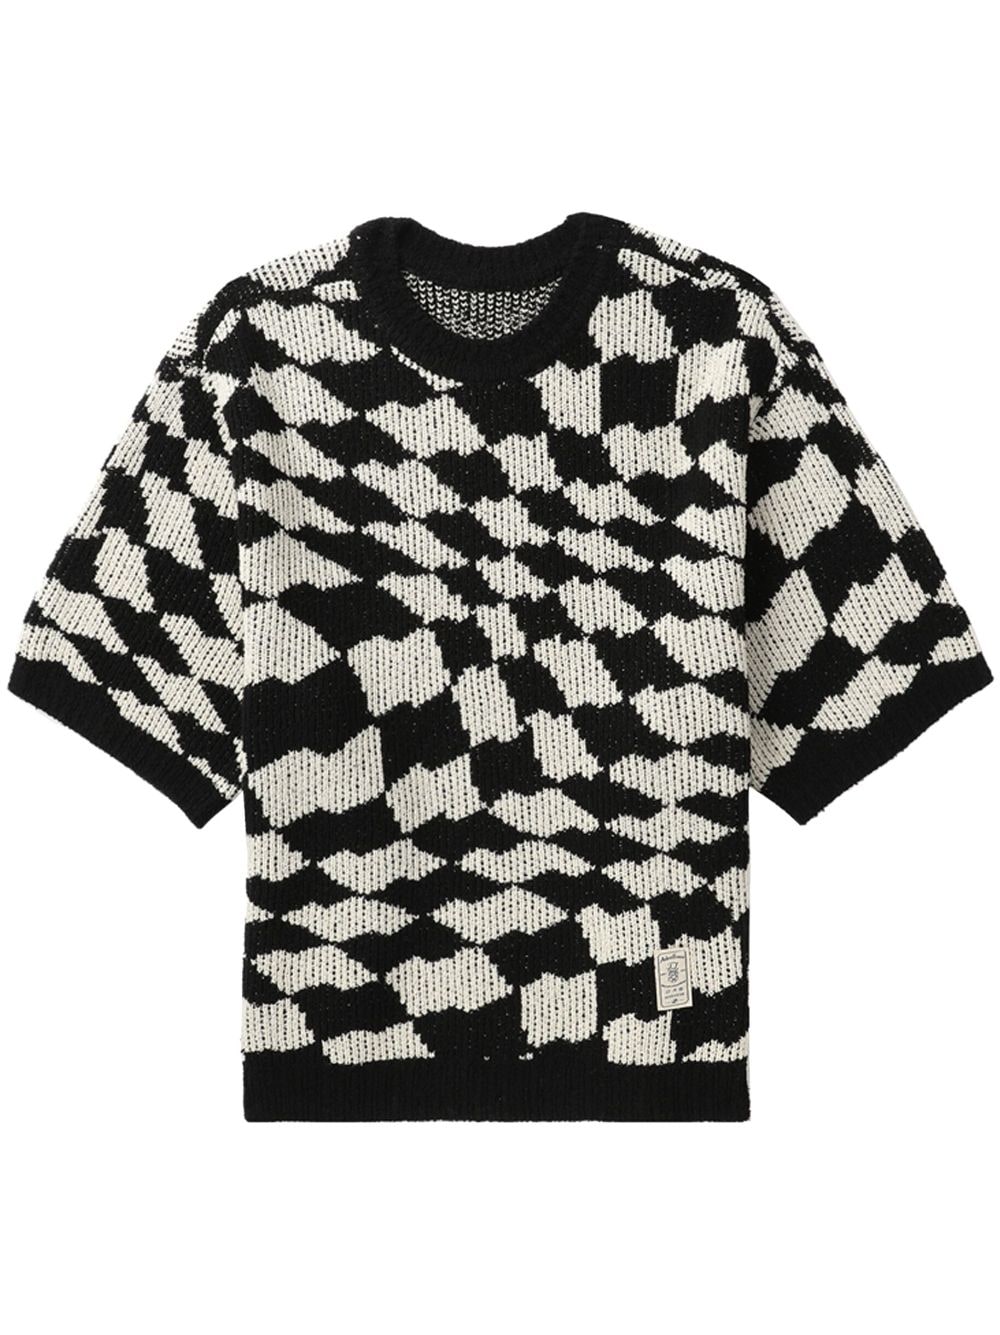 Ader Error check-print knitted jumper - Black